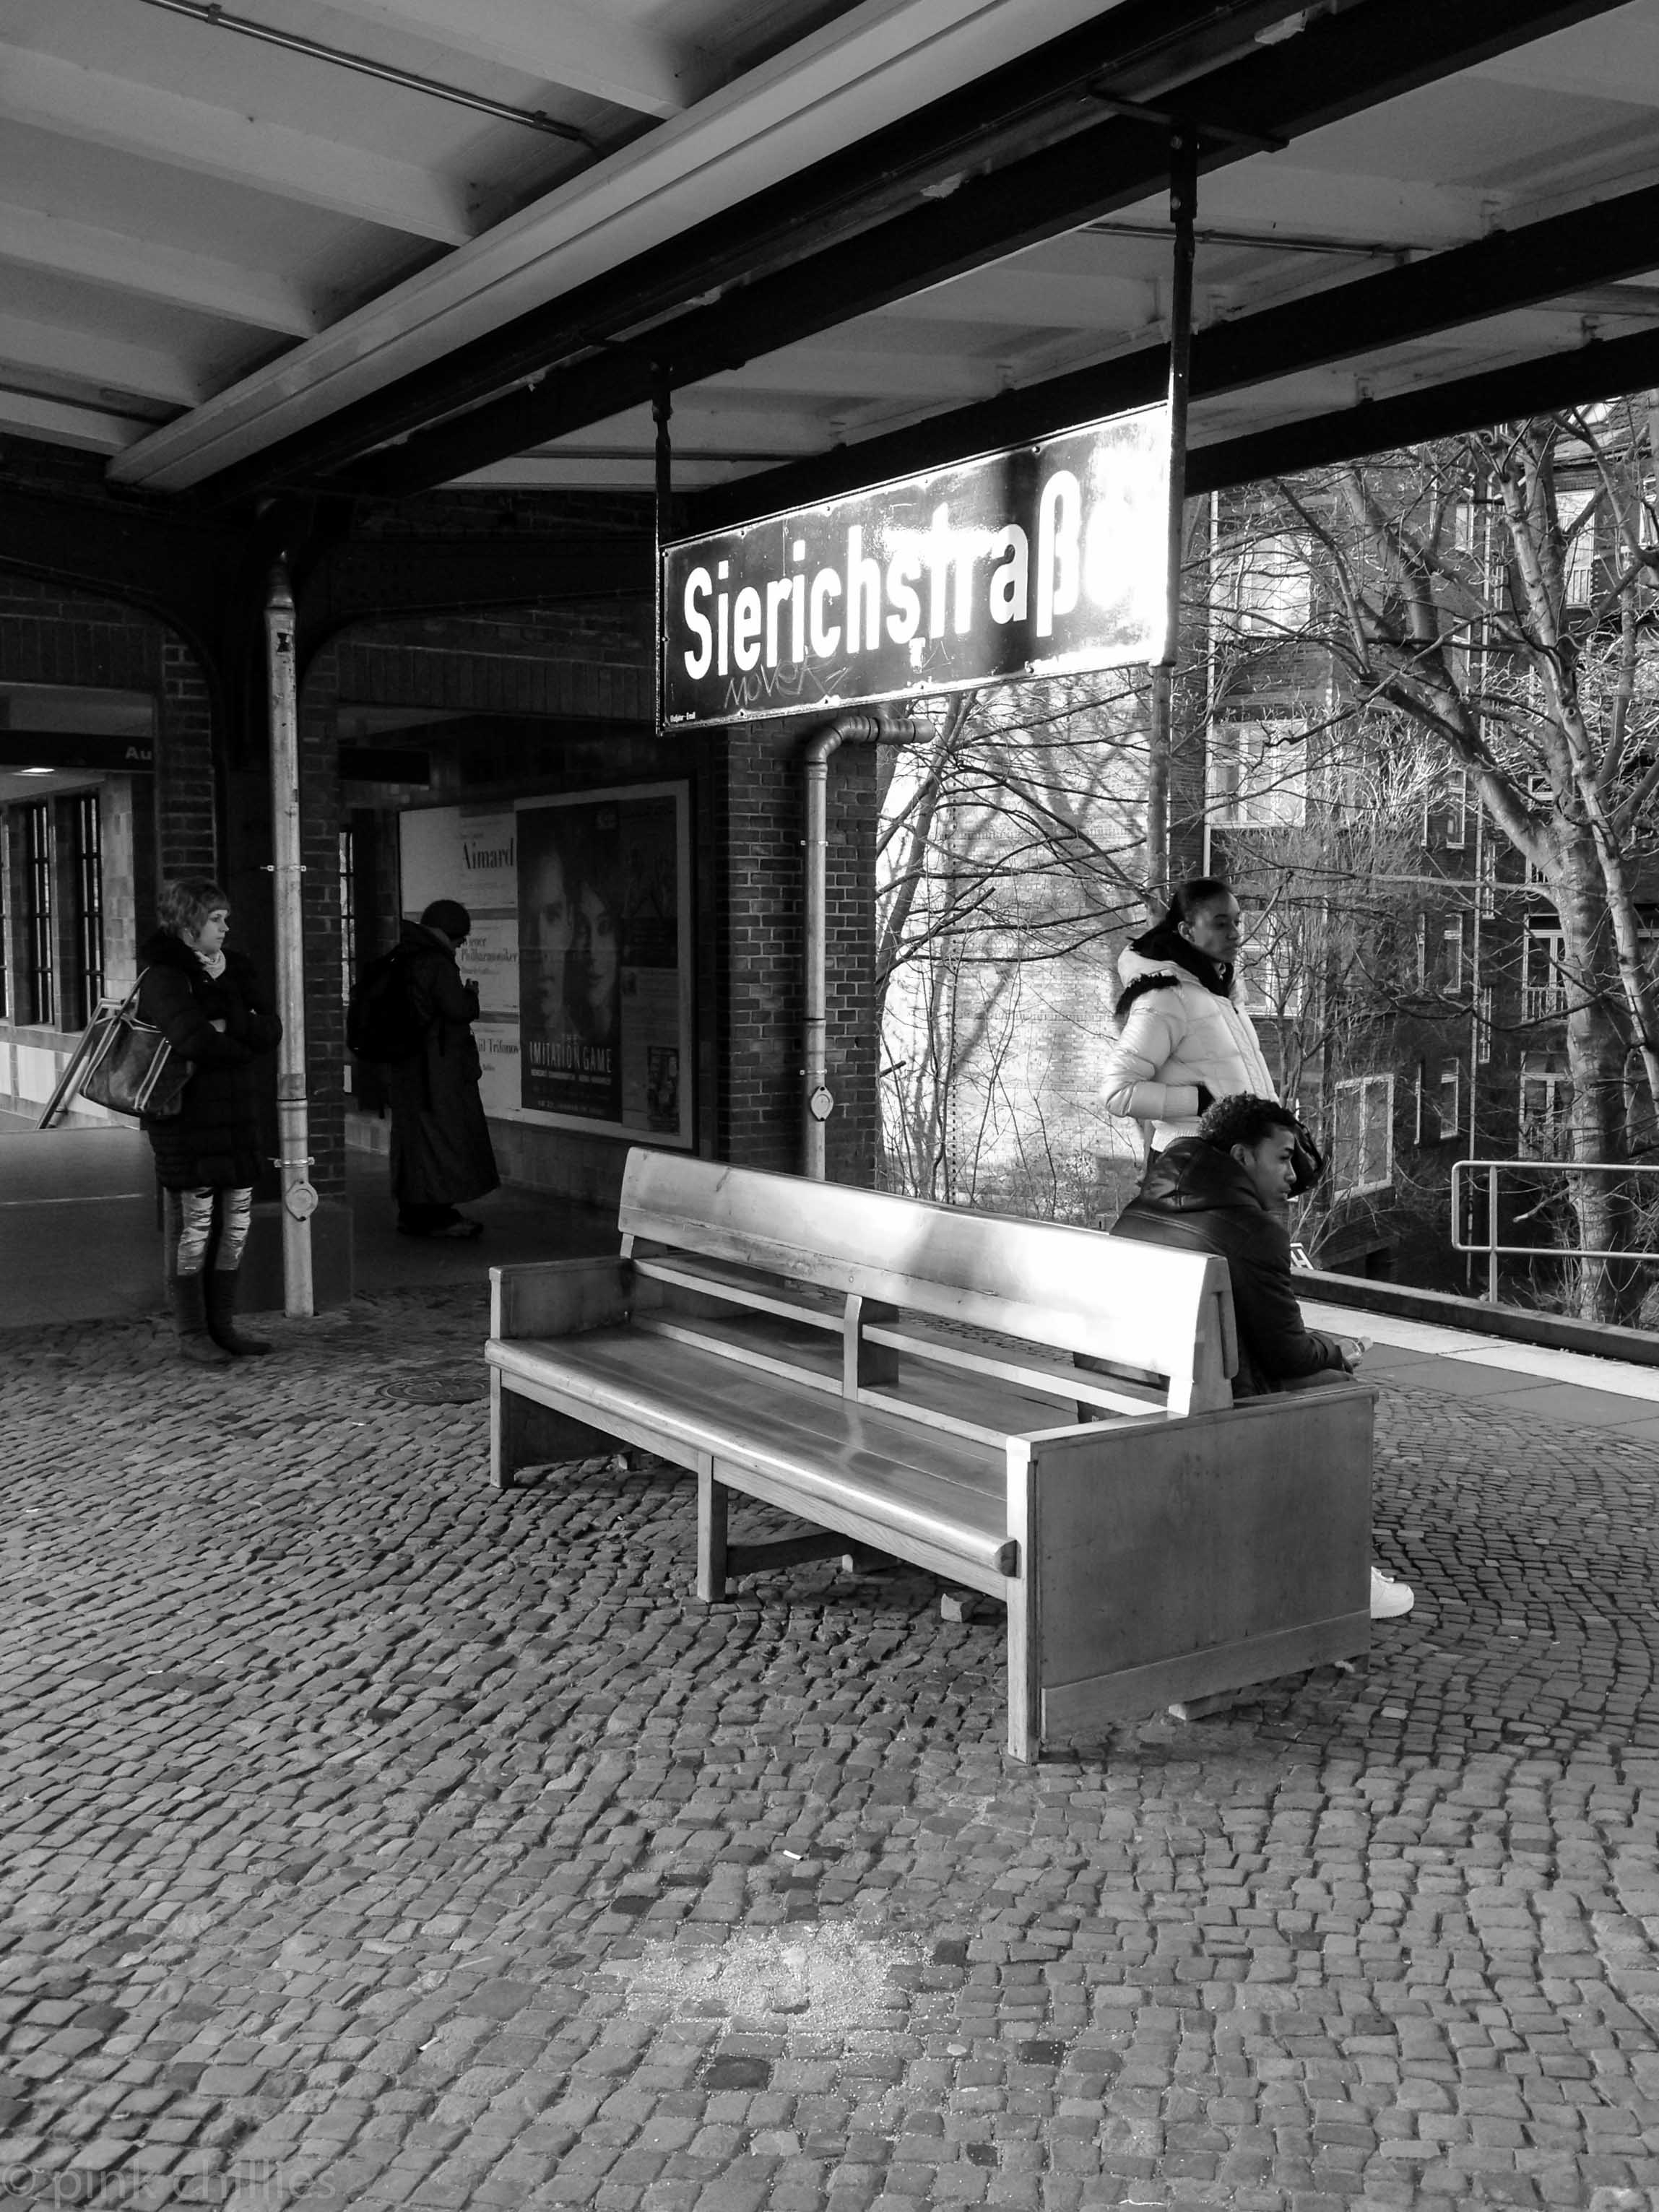 U-Bahnhaltestelle Sierichstraße